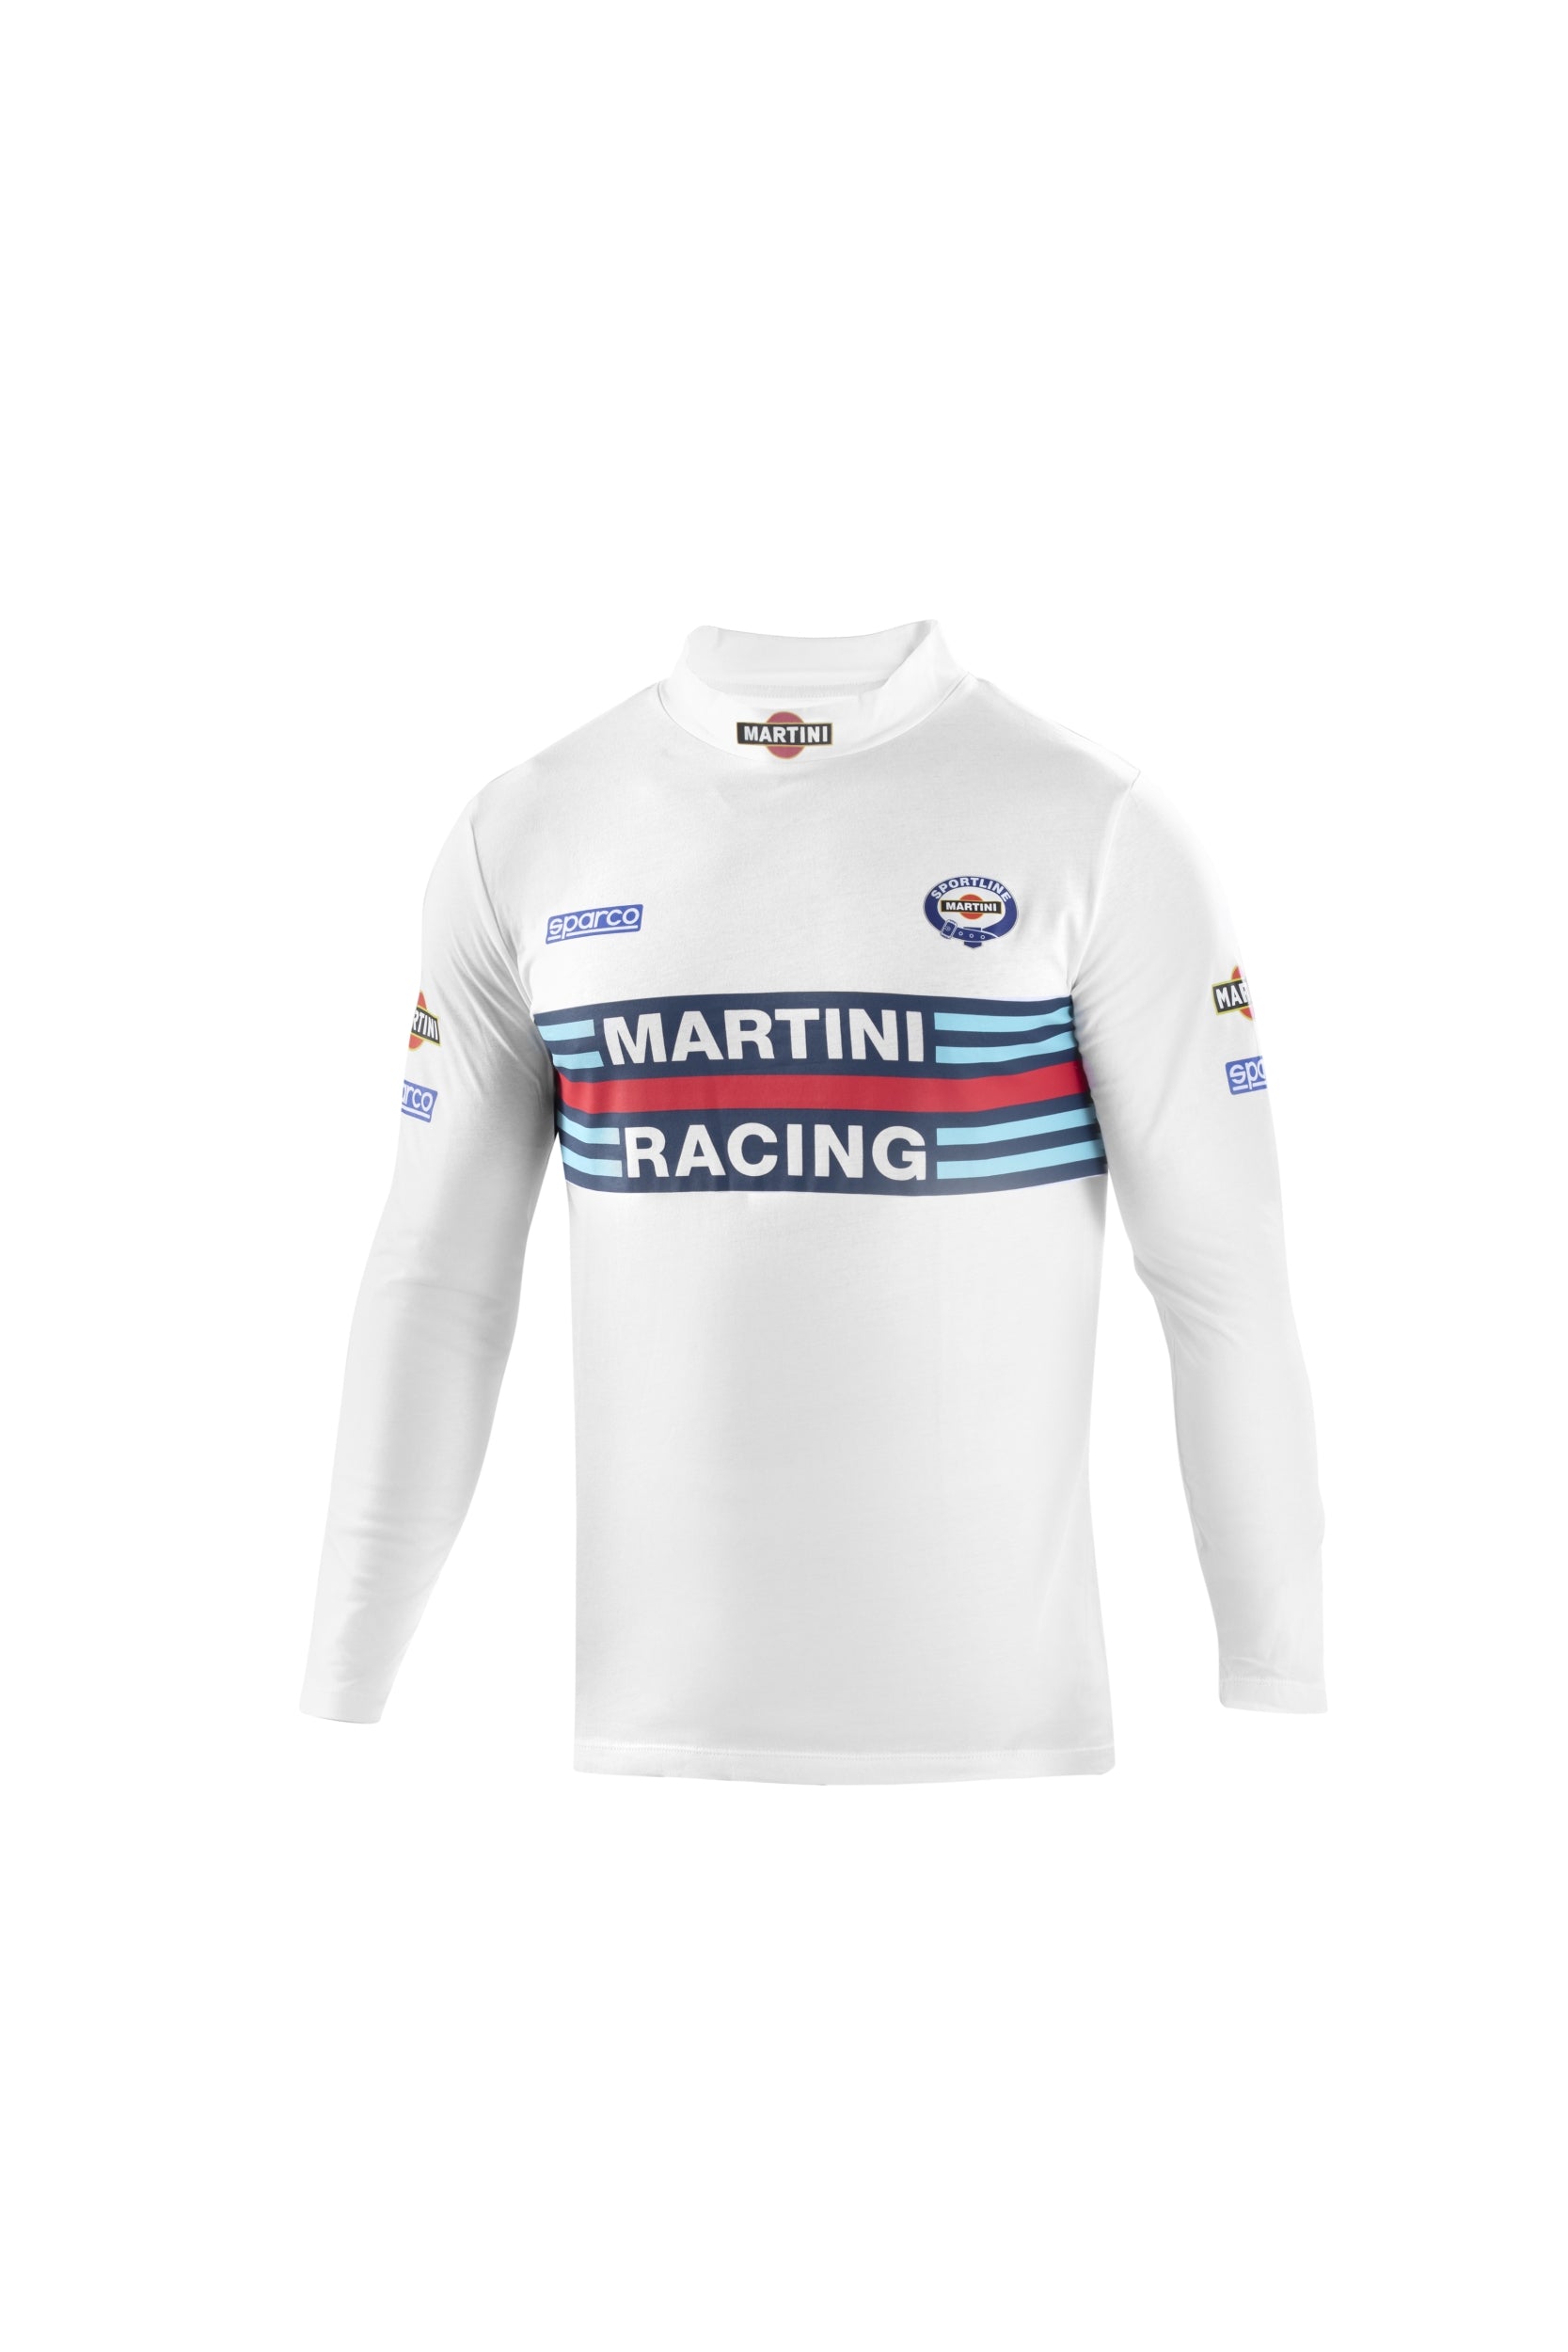 SPARCO 002206MRBI5XXL Long sleeves T-shirt MARTINI RACING, high collar, white, size XXL Photo-0 